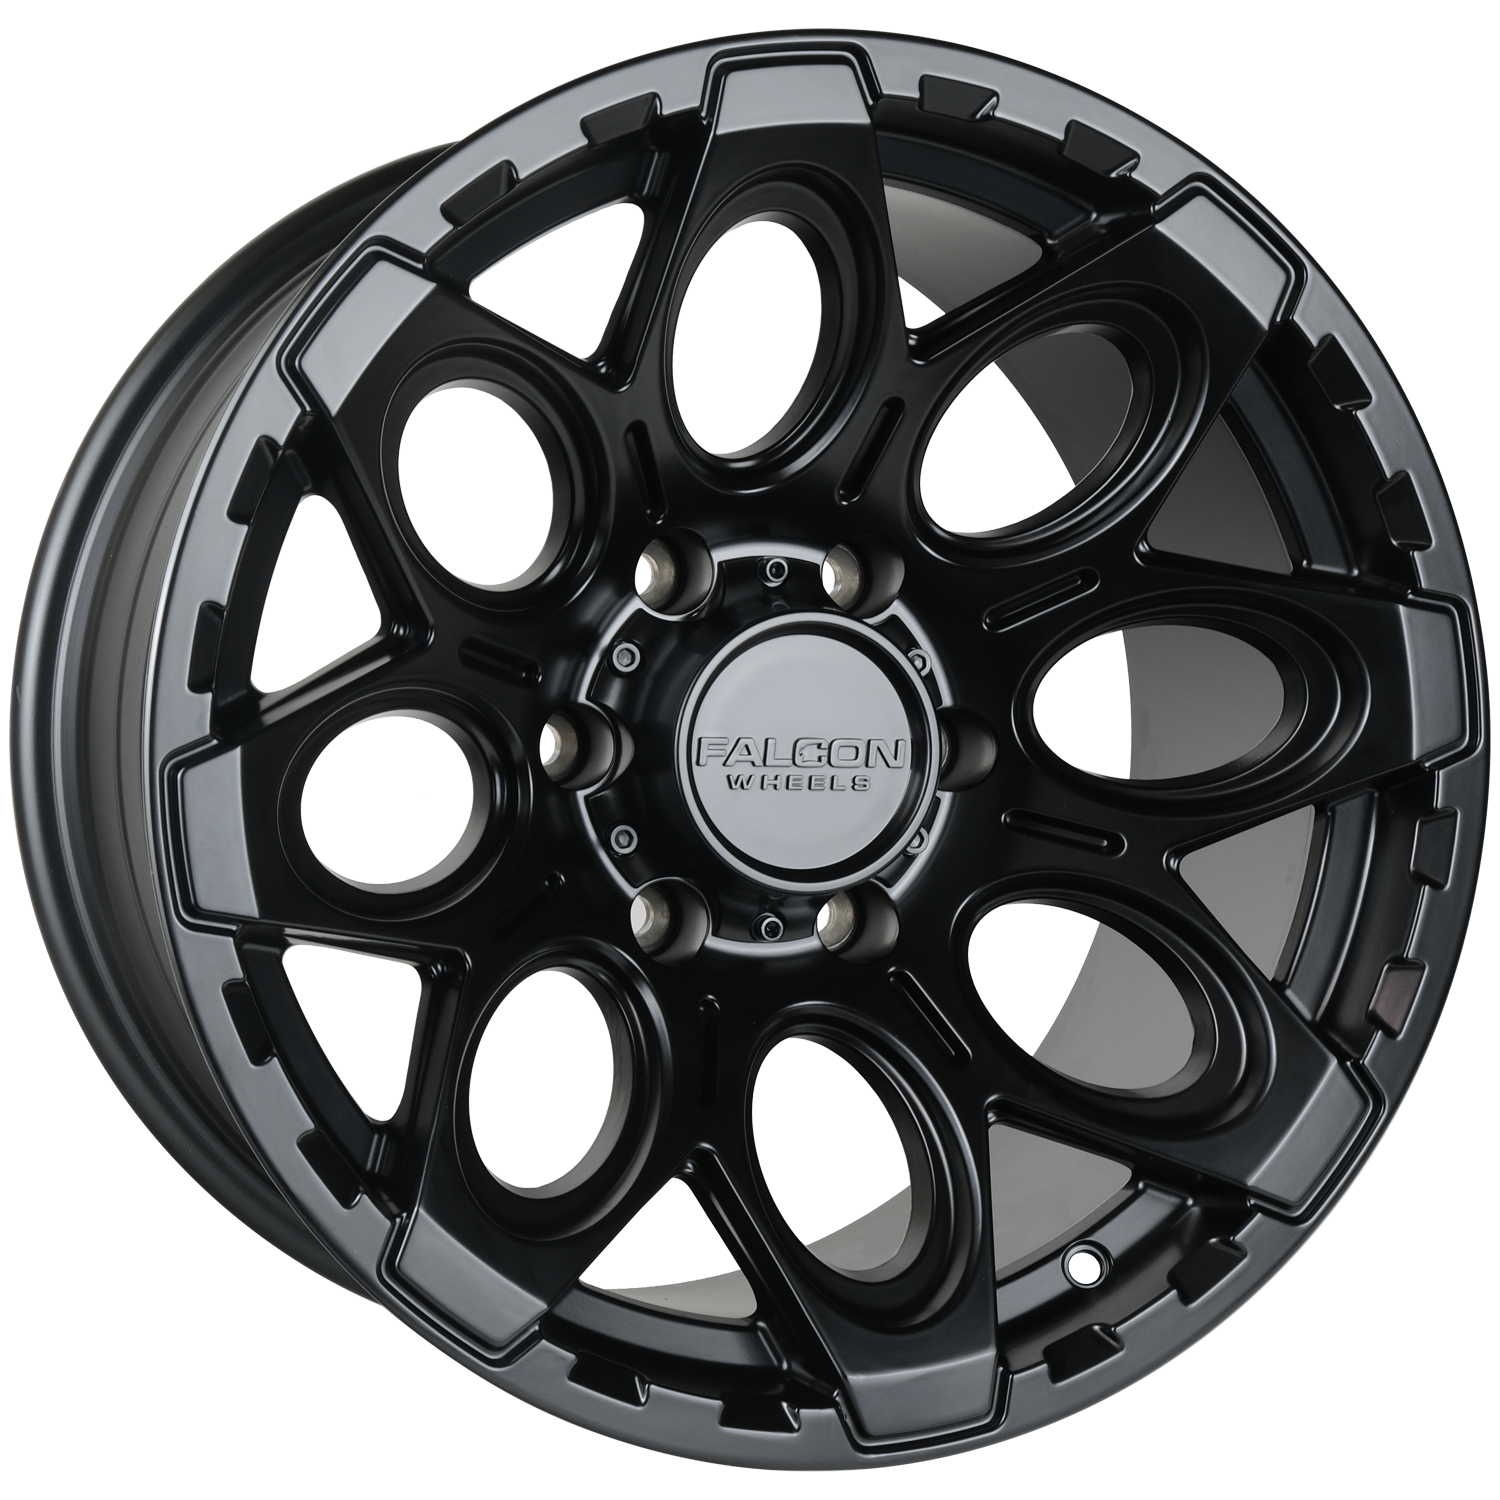 T6 - Matte Black 17x9 - Premium Wheels from Falcon Off-Road Wheels - Just $270! Shop now at Falcon Off-Road Wheels 